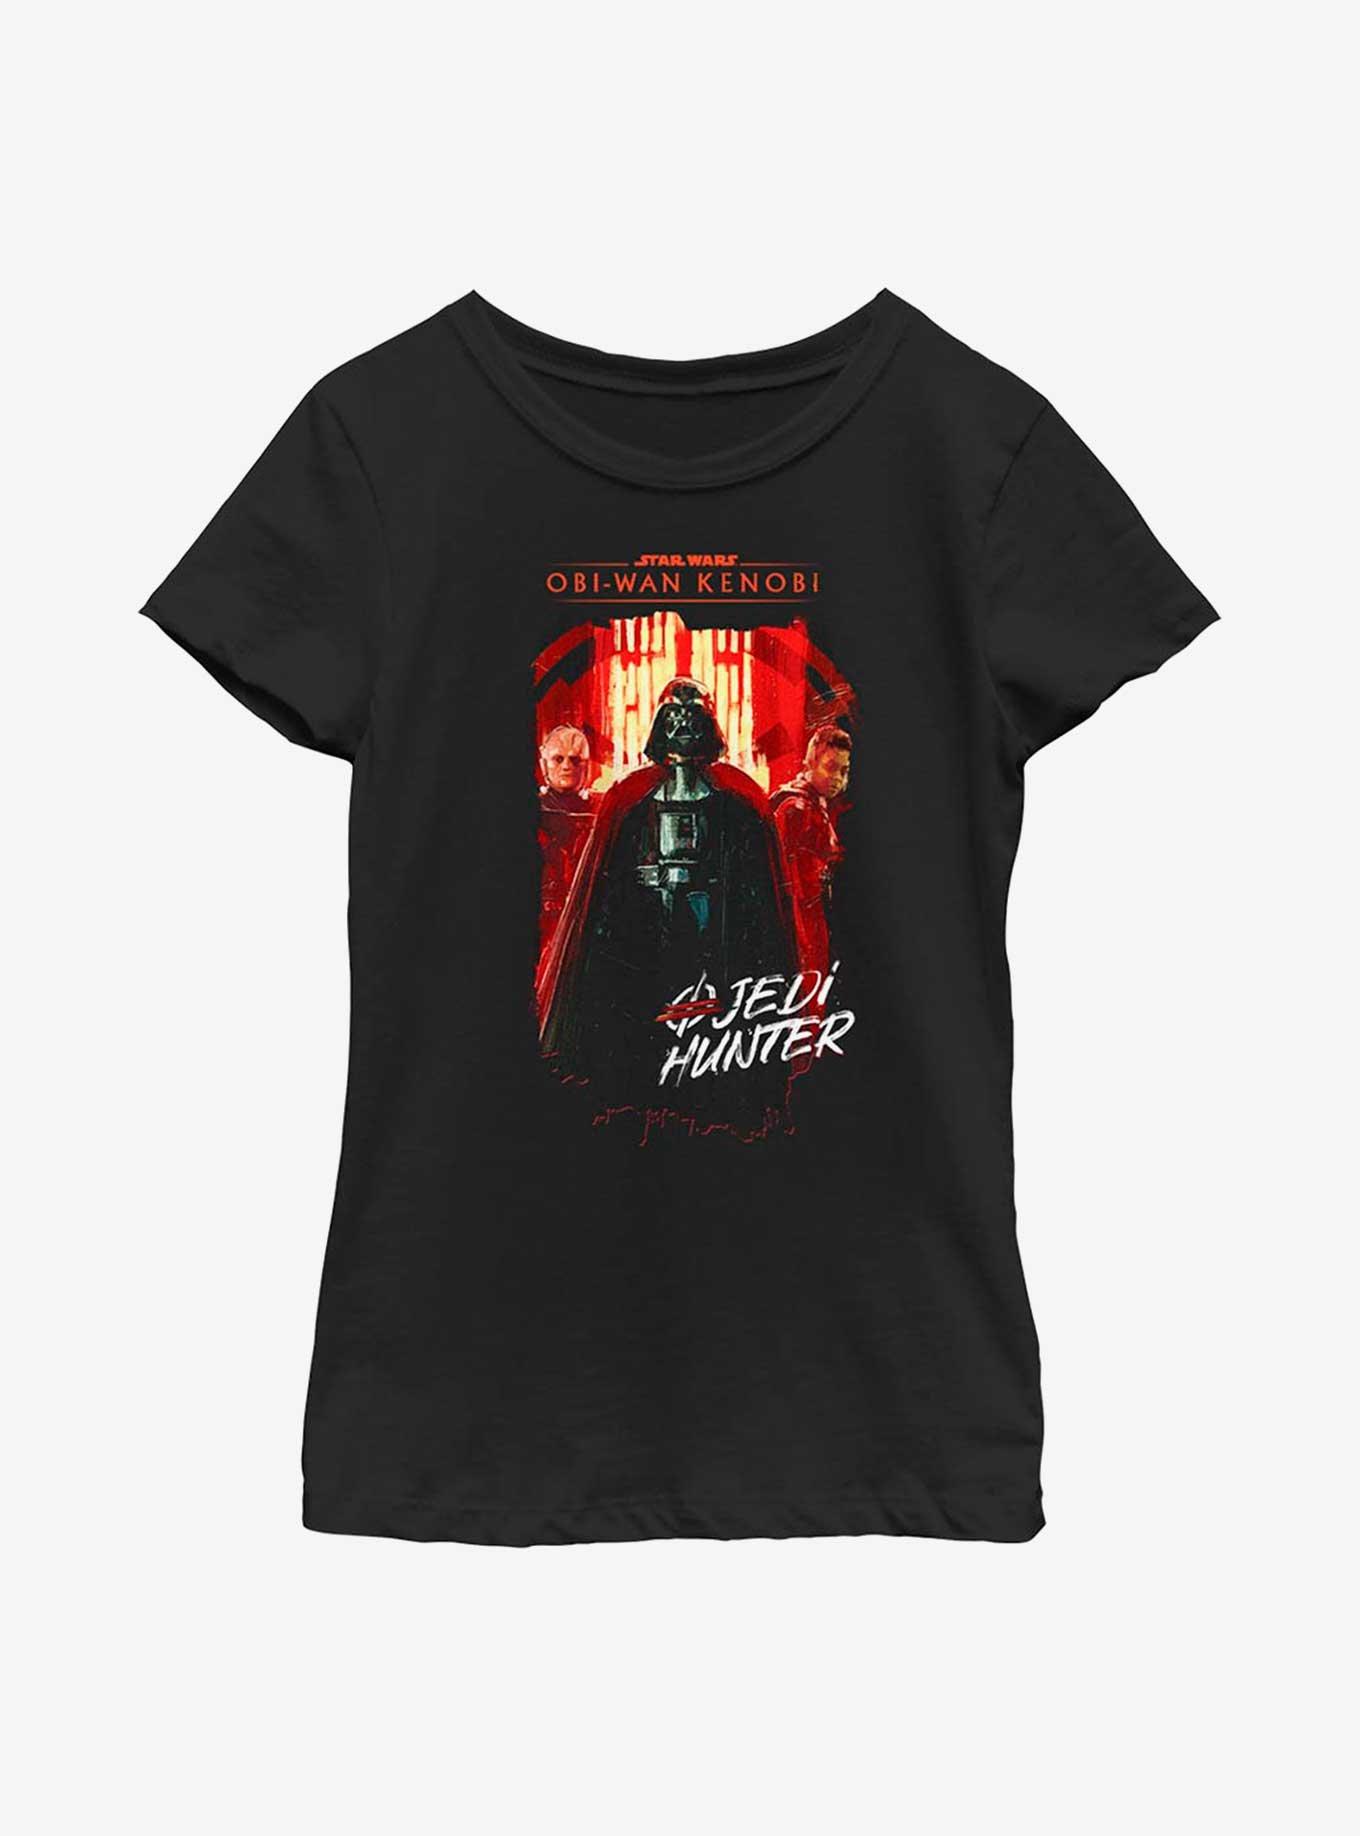 Star Wars Obi-Wan Kenobi Jedi Hunter Darth Vader And Inquistors Youth Girls T-Shirt, BLACK, hi-res